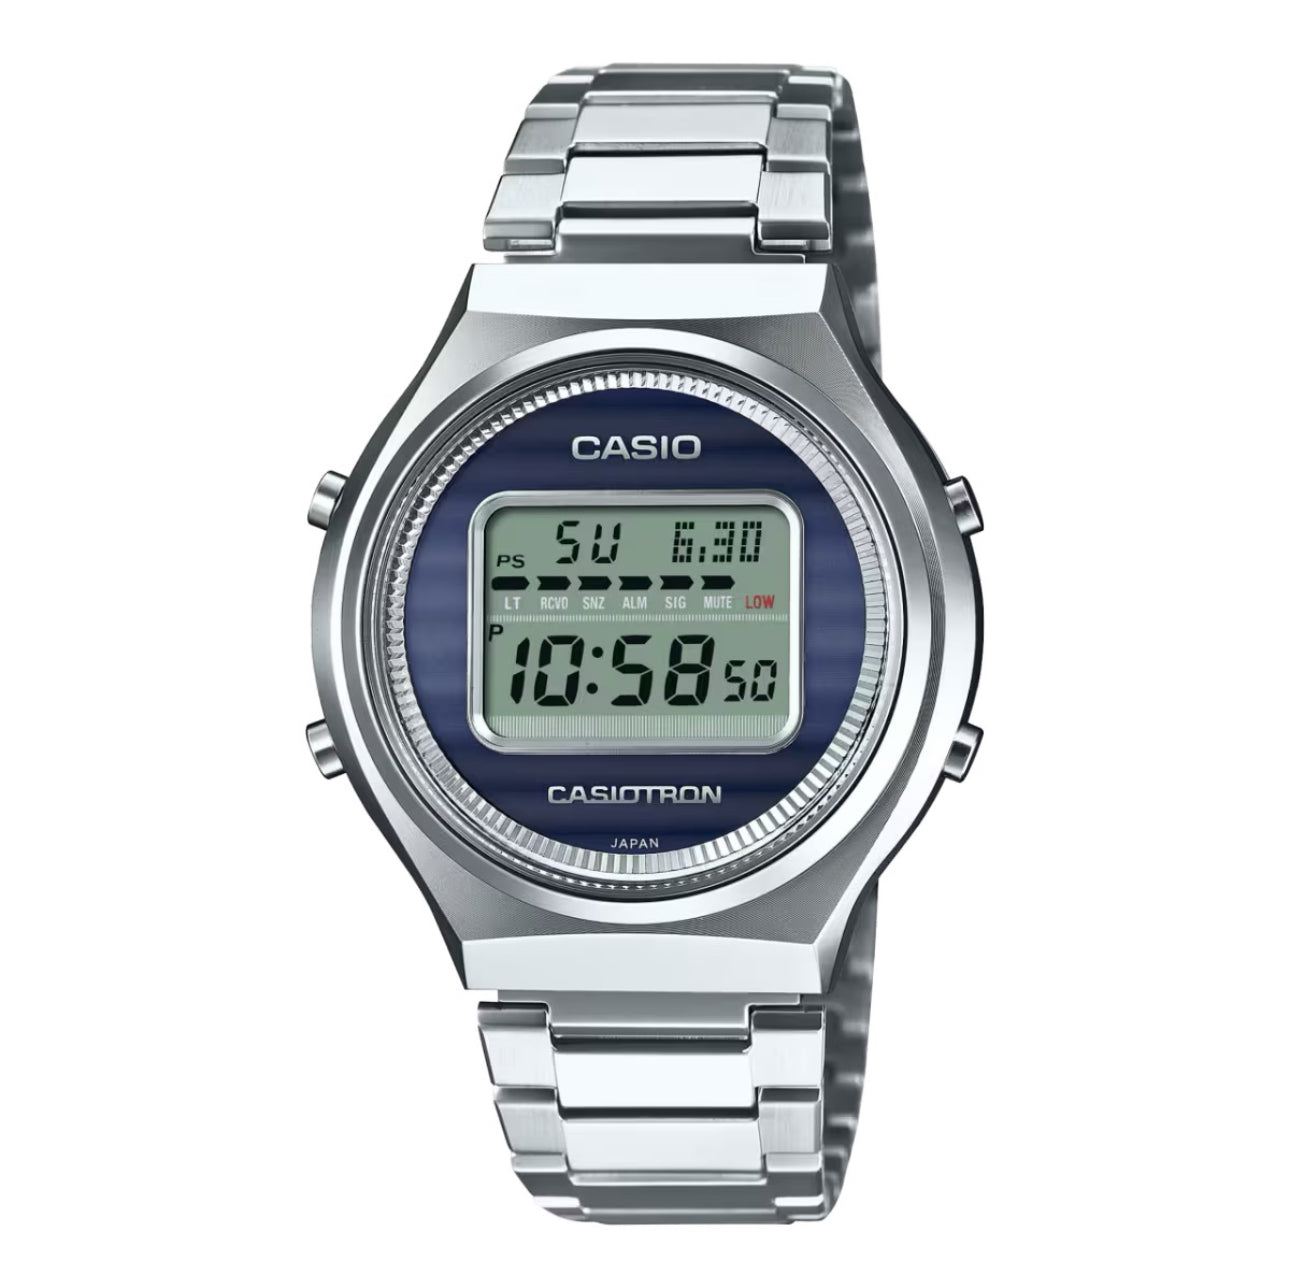 Casio TRN50-2A Casiotron Limited Edition Watch